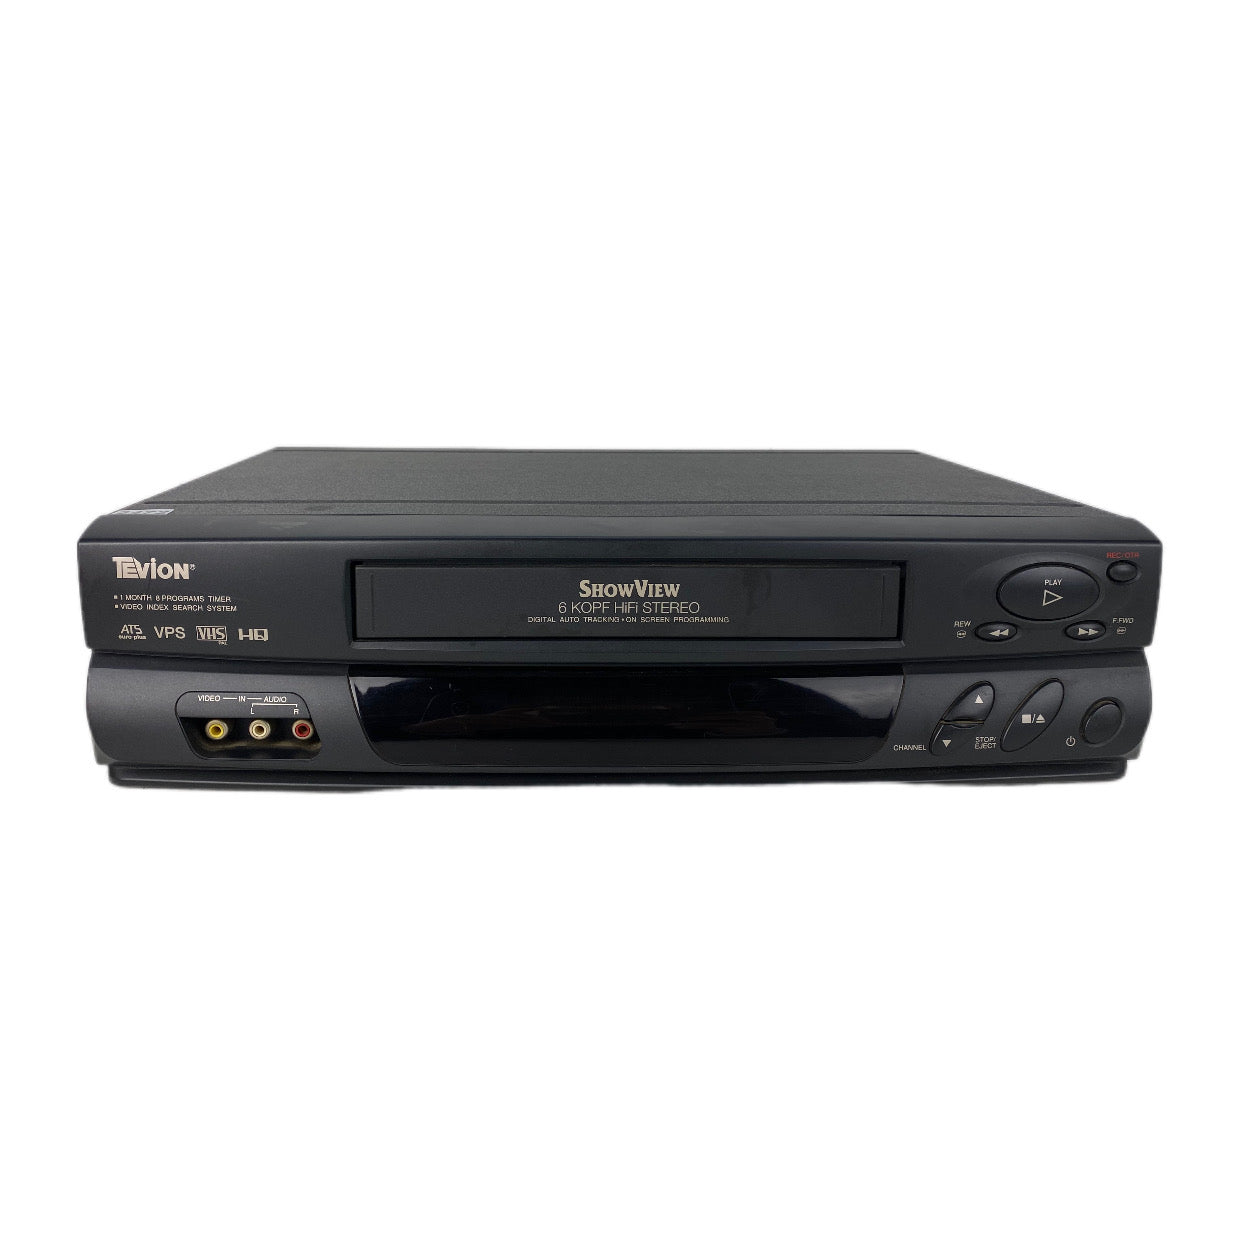 Tevion MD 8950 VHS Video Cassette Recorder